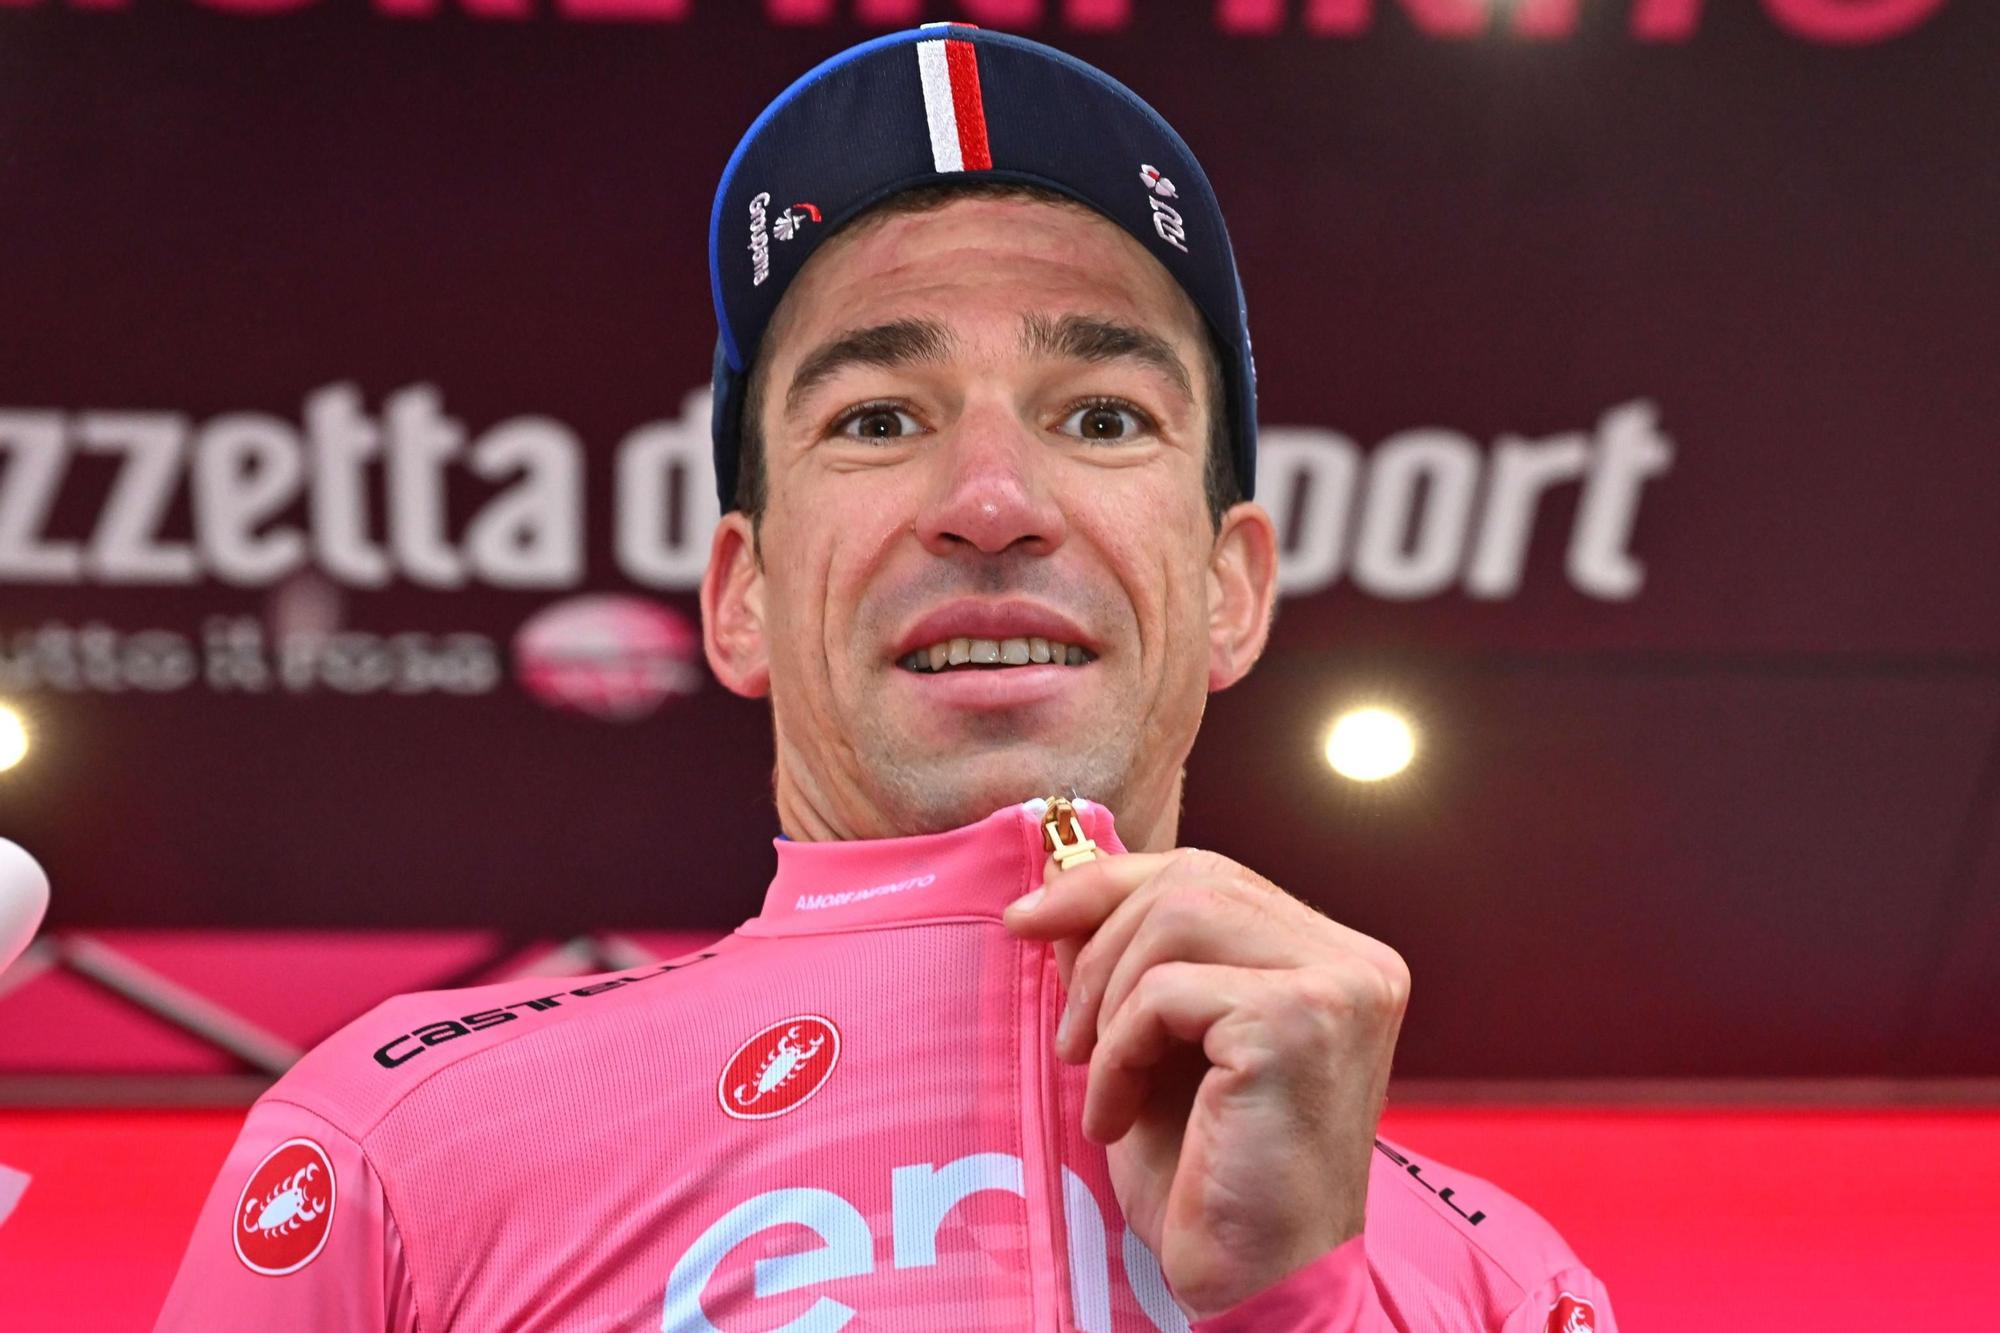 Giro d'Italia - 14th stage